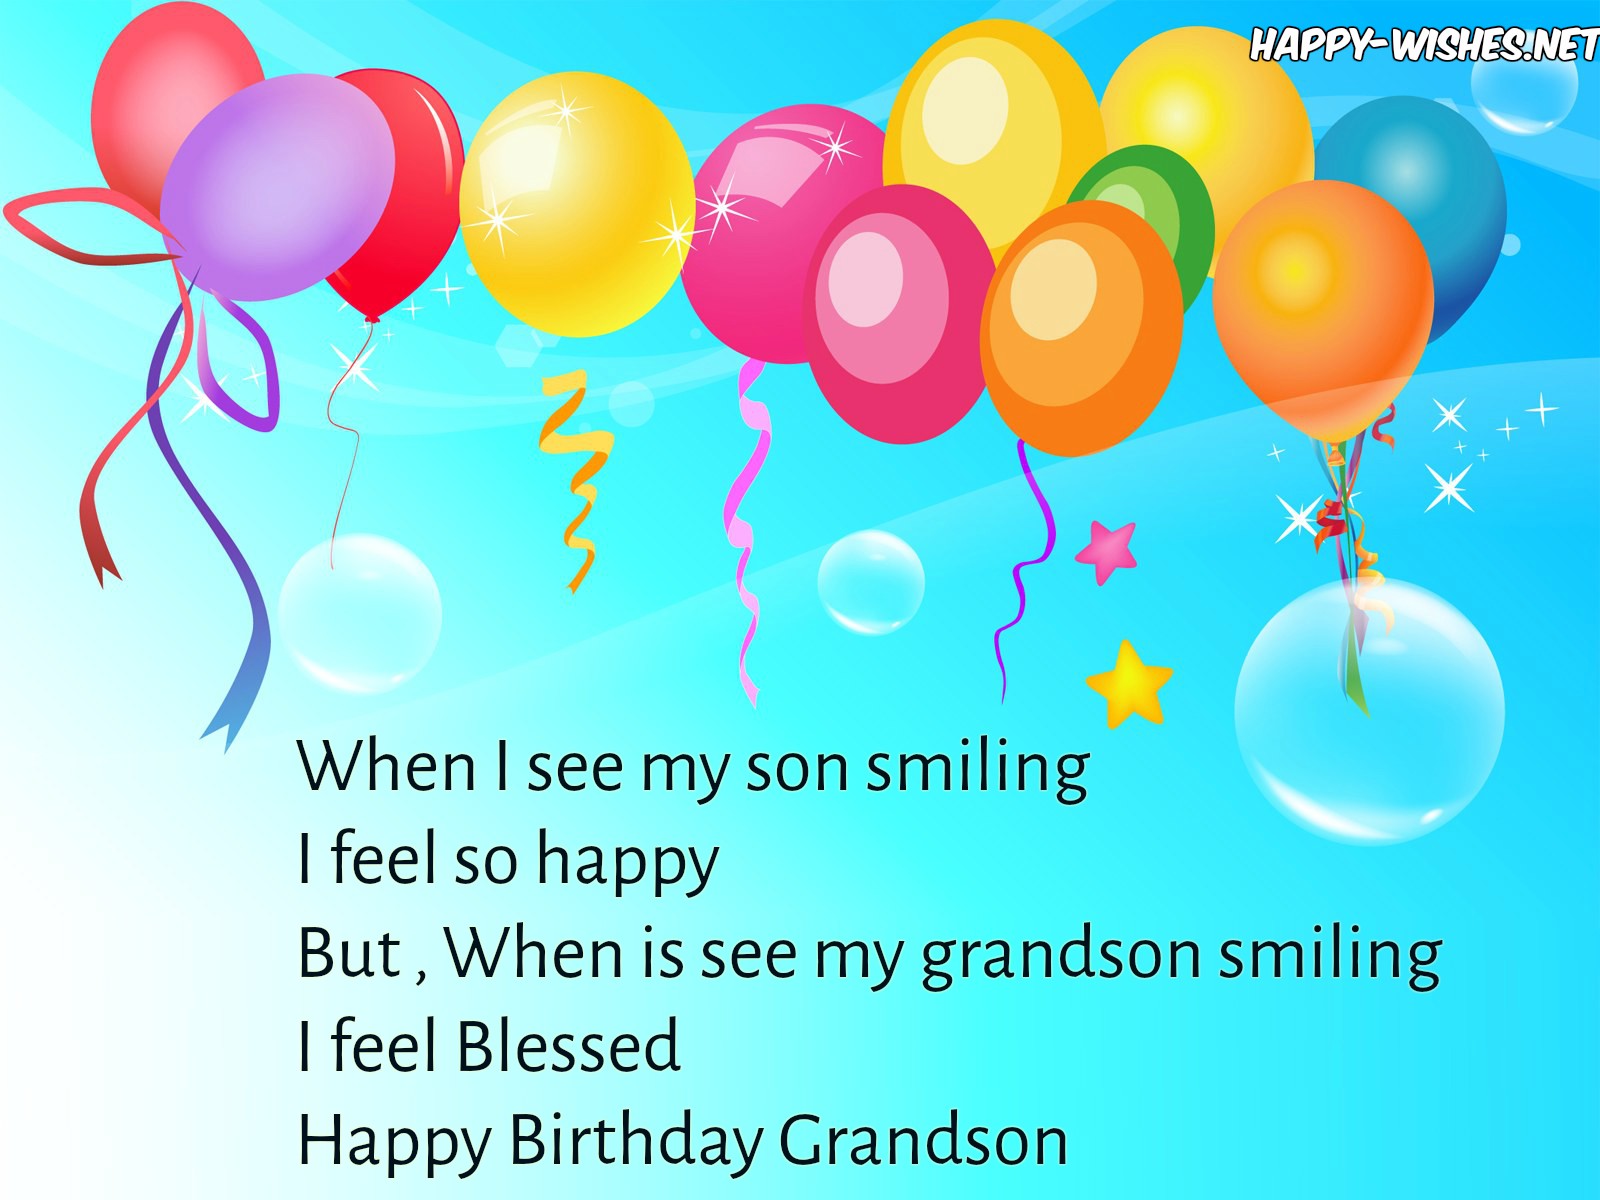 Happy Birthday wishes for Grandson